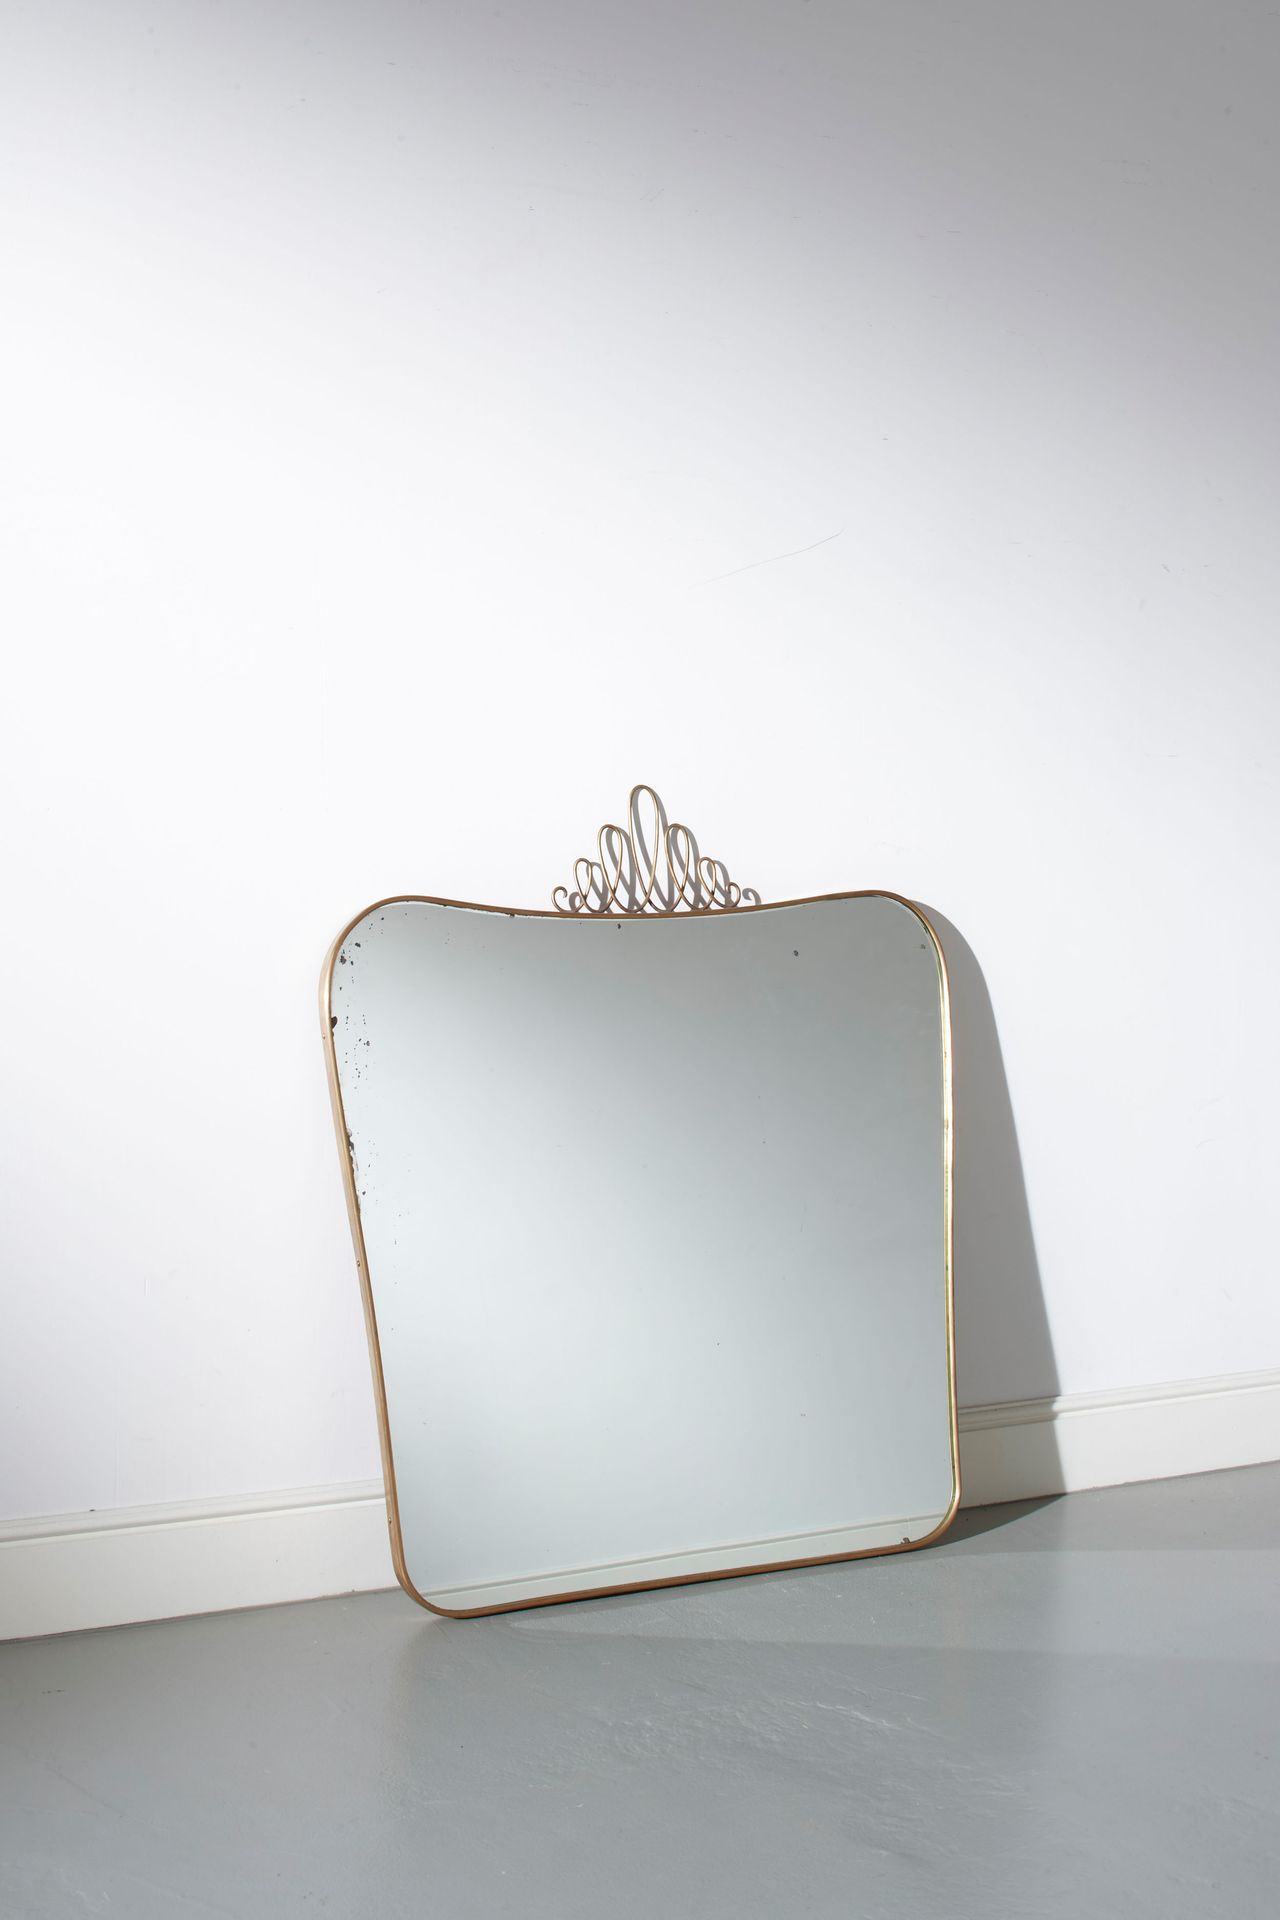 Manifattura Italiana Mirror. Brass, mirrored crystal. Italy 1950s. 
Cm 92x80x3
A&hellip;